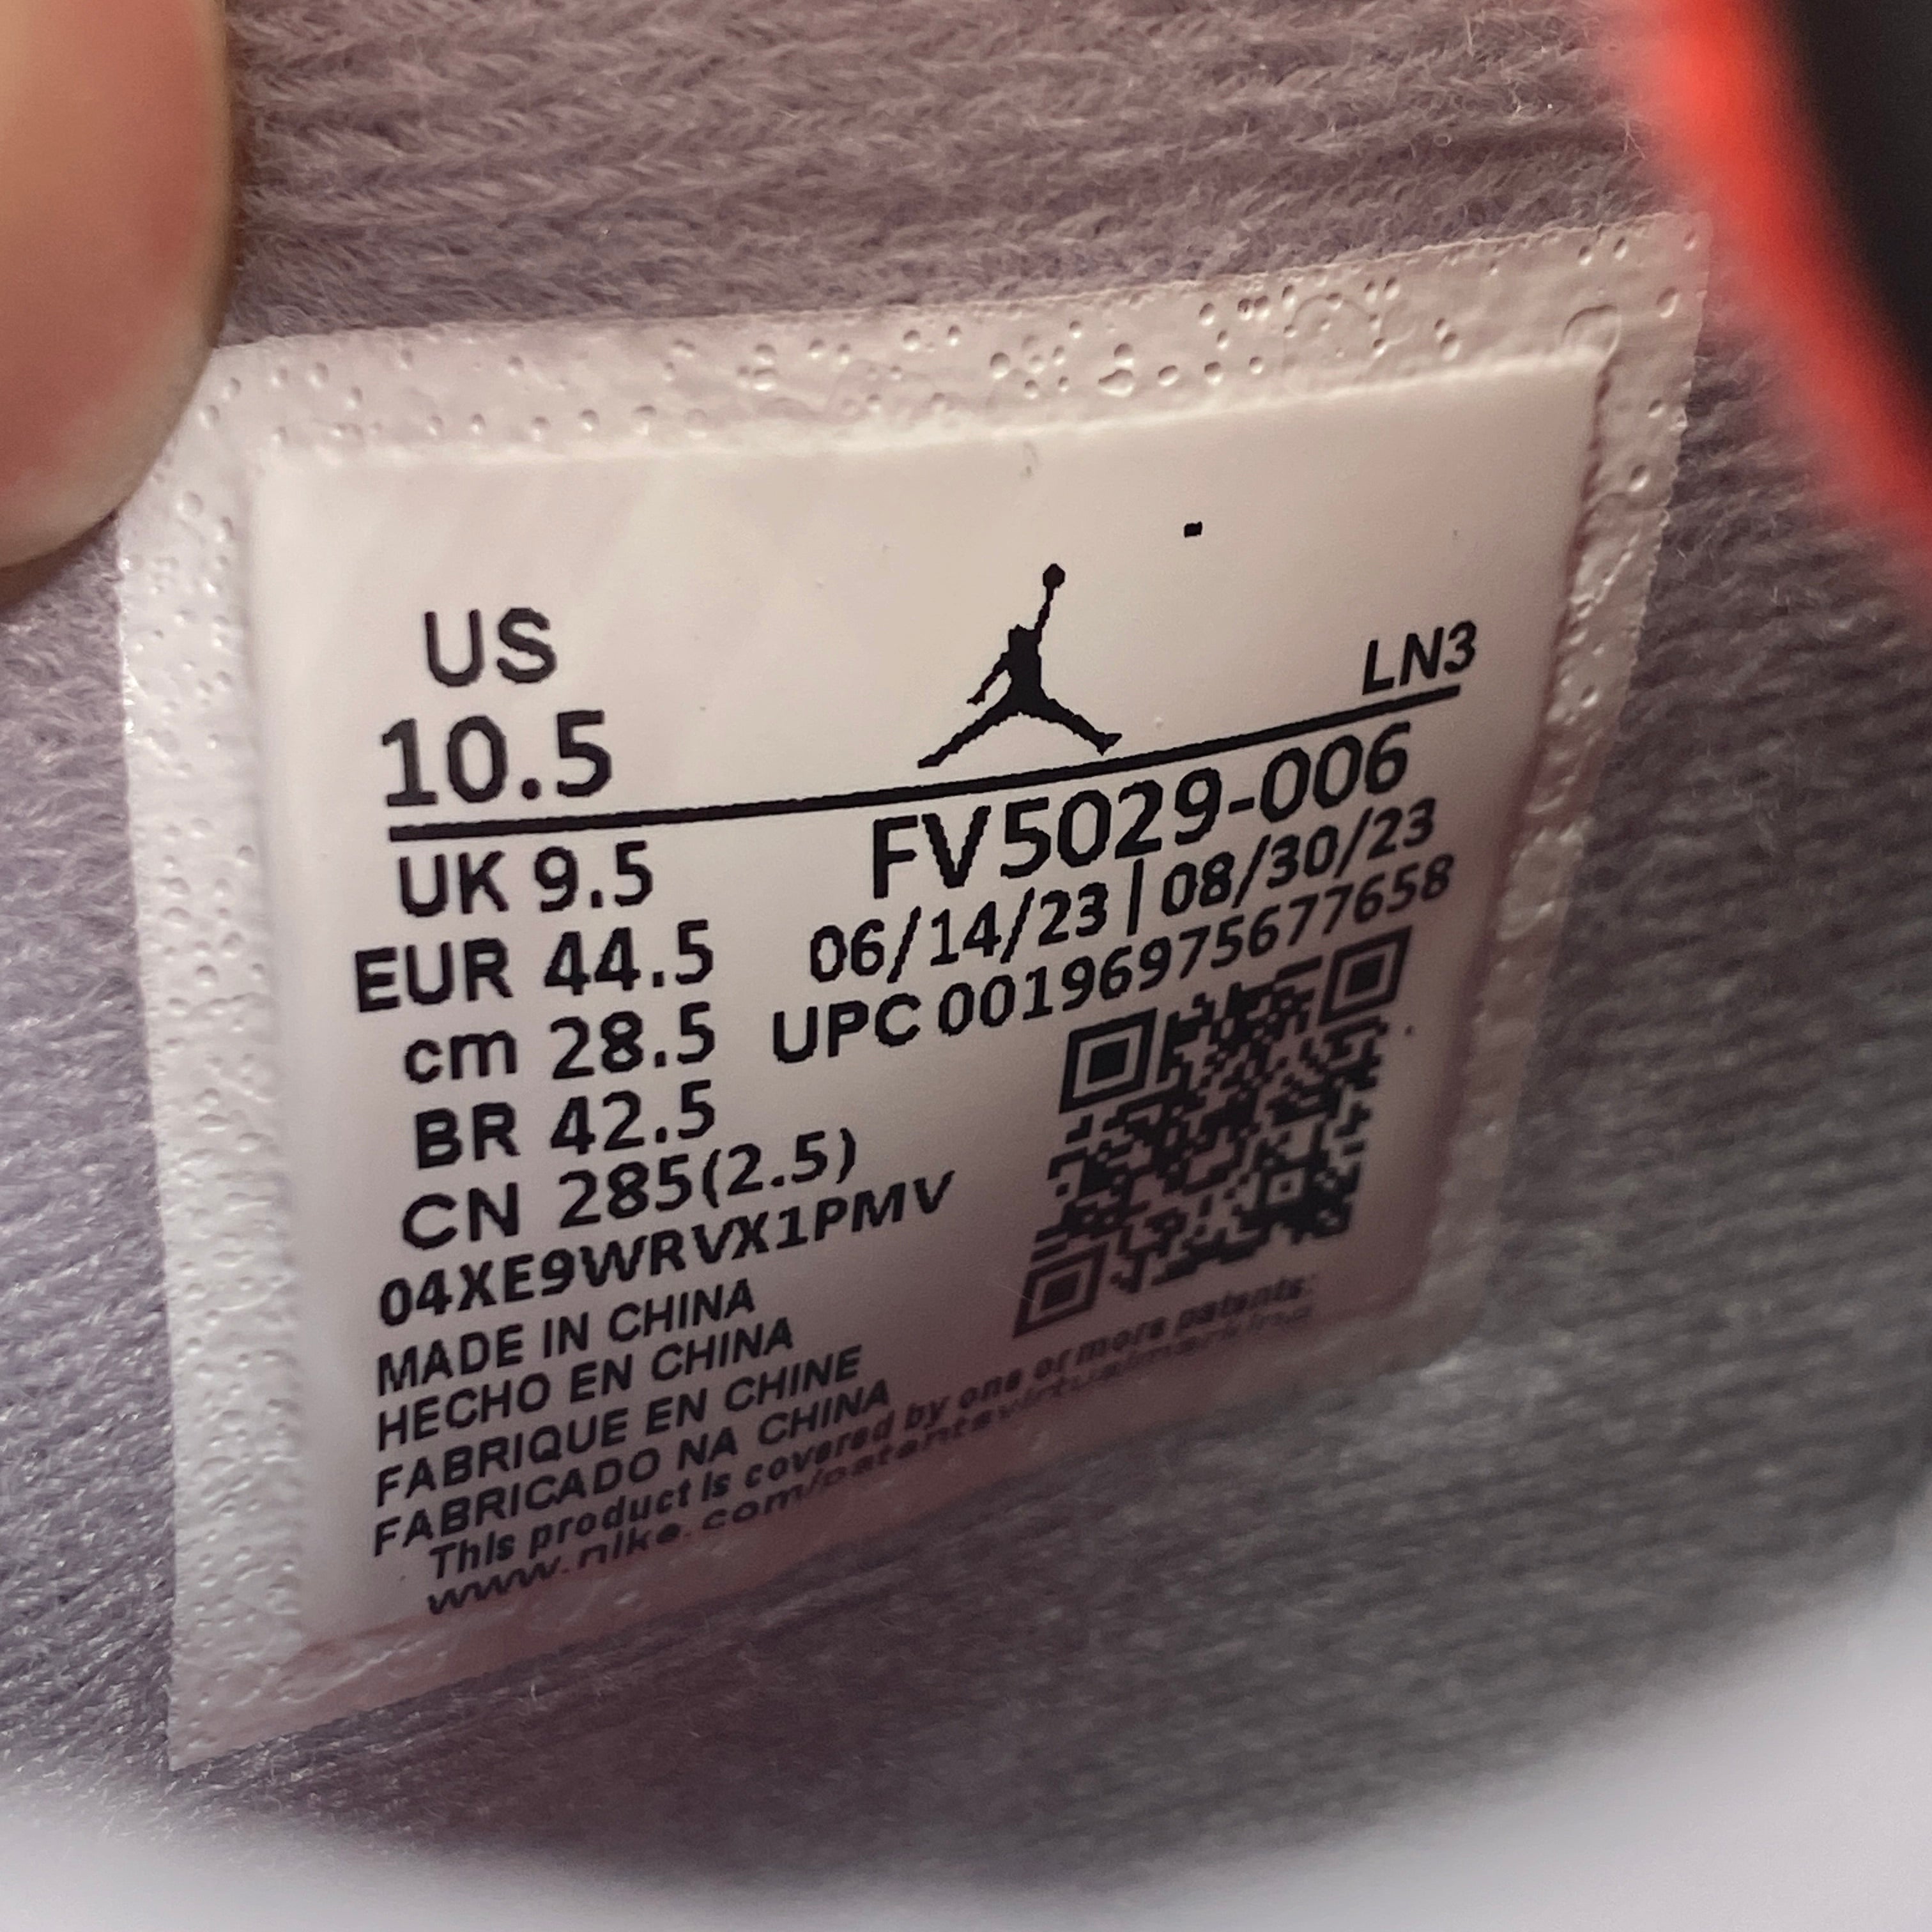 zapatillas de running Nike hombre talla 44 baratas menos de 60